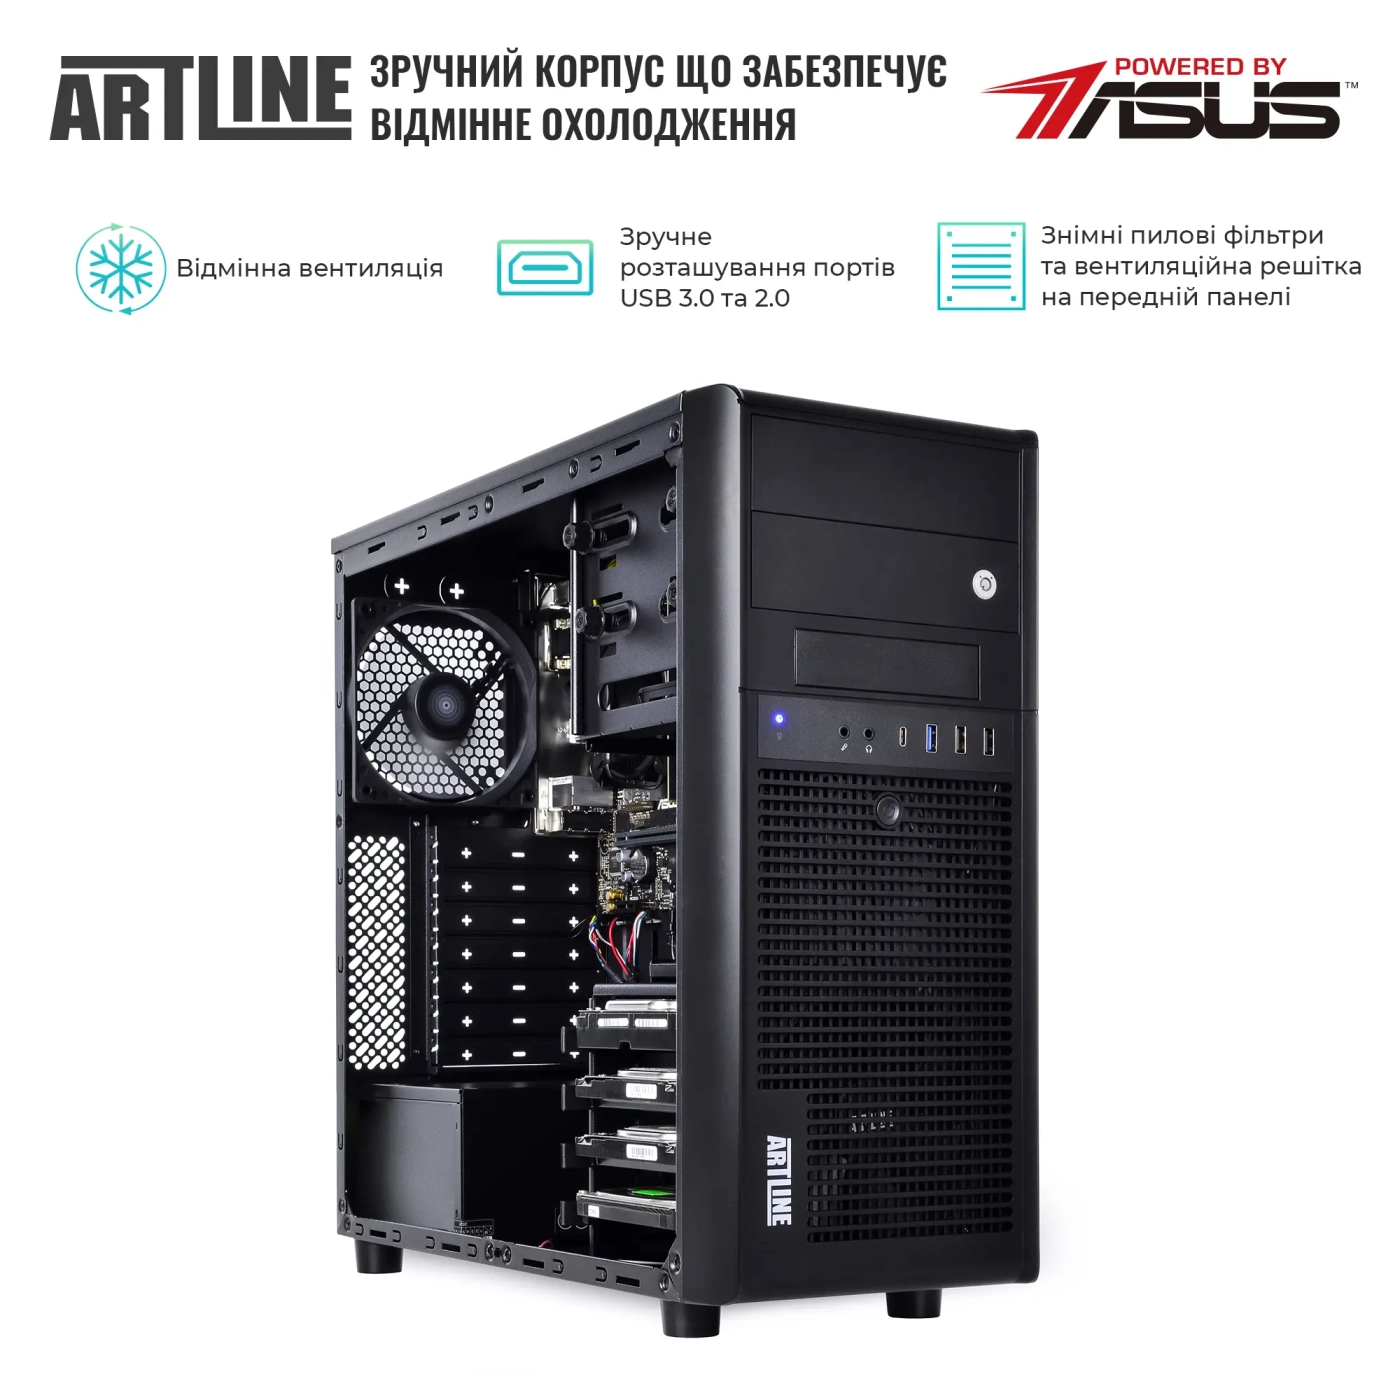 Купити Сервер ARTLINE Business T35 (T35v41) - фото 3